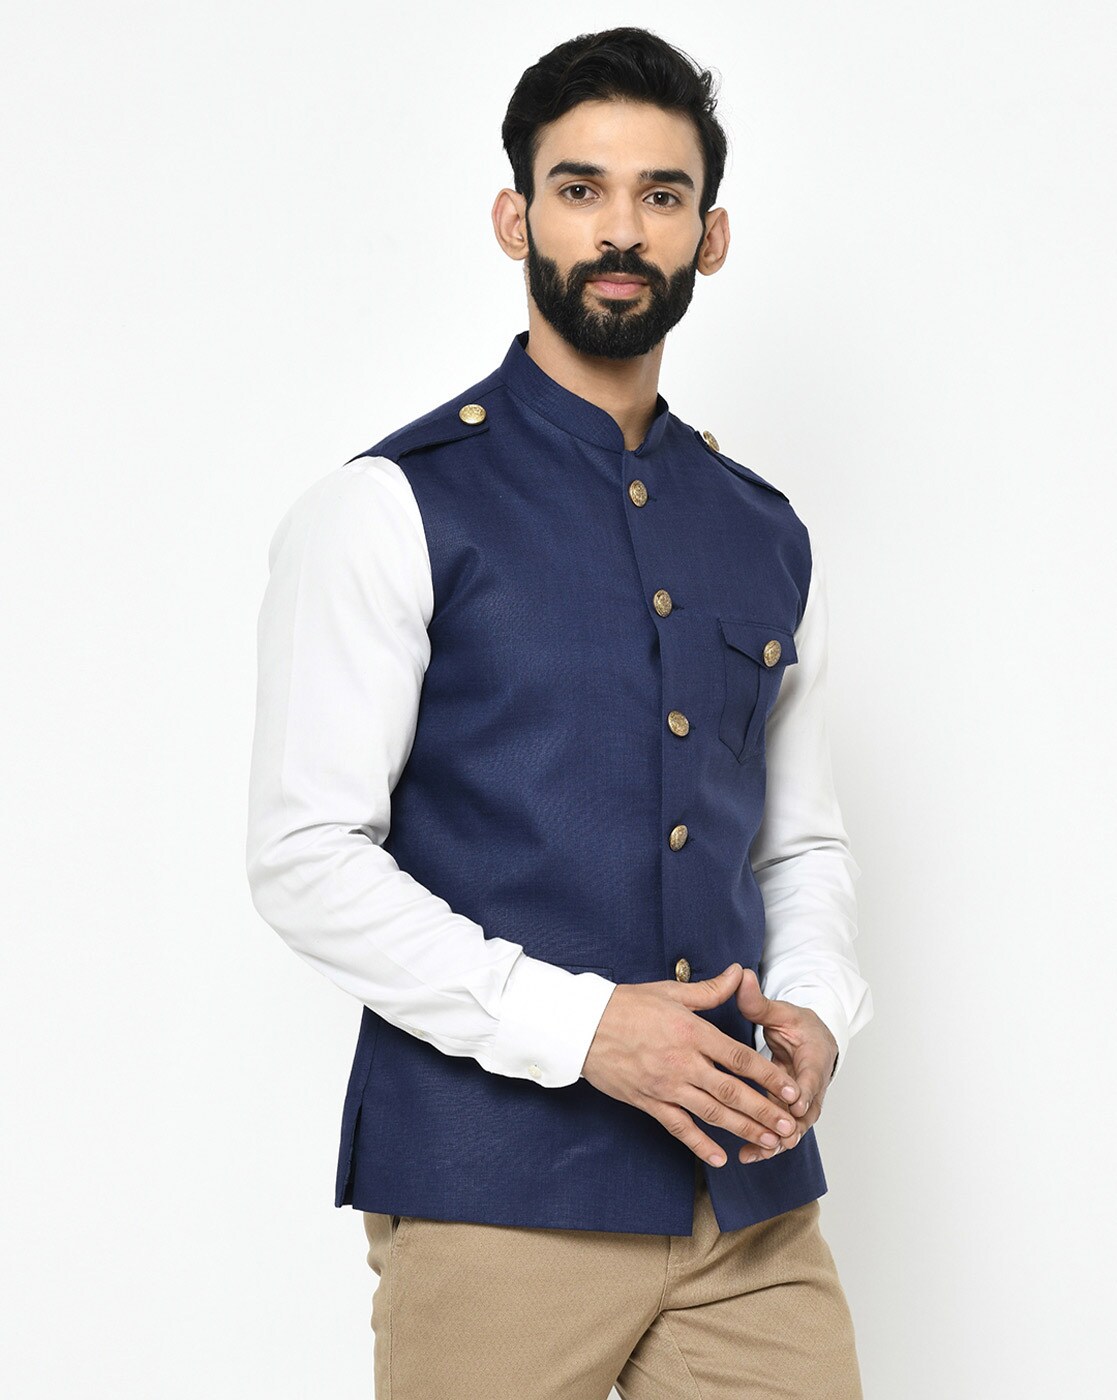 Joot Mehroom Modi jacket, Formal Wear at Rs 600/piece in Jaipur | ID:  25240507133